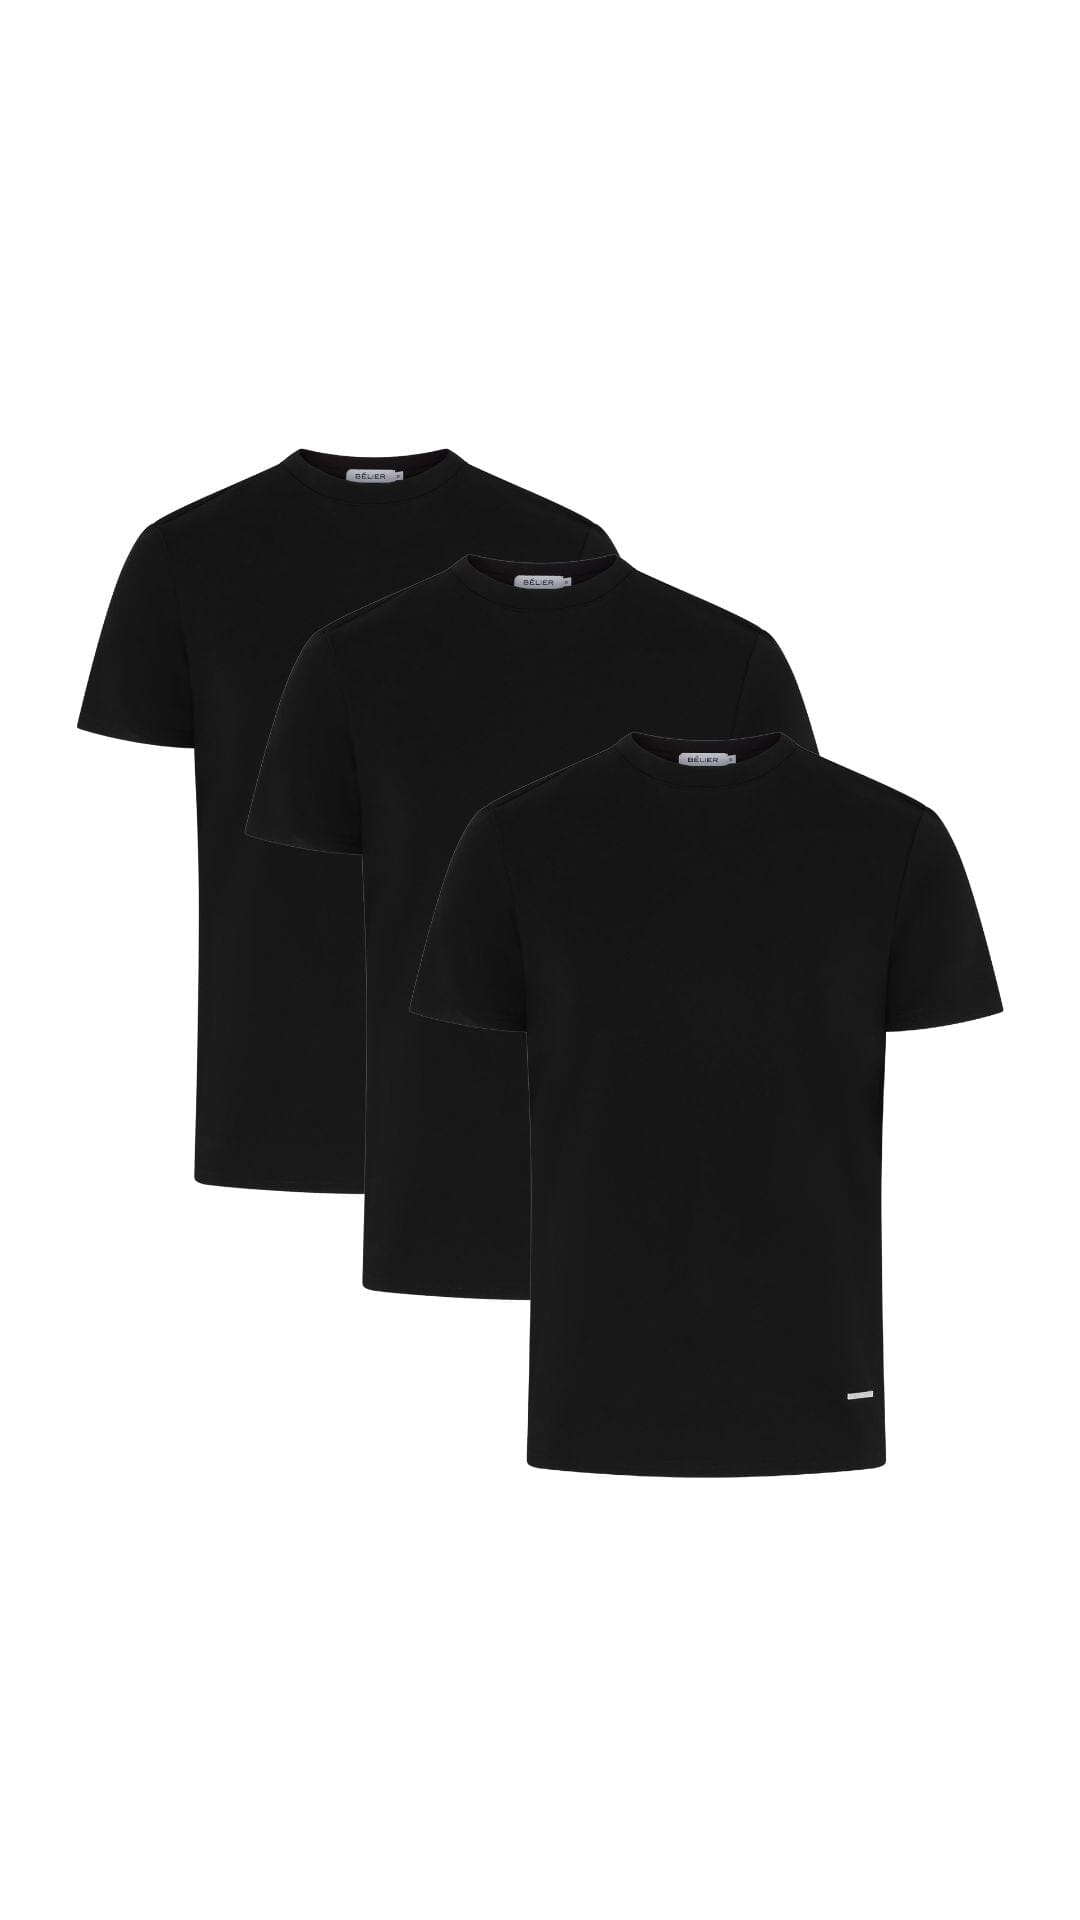 3 Pack Premium Black T-Shirt